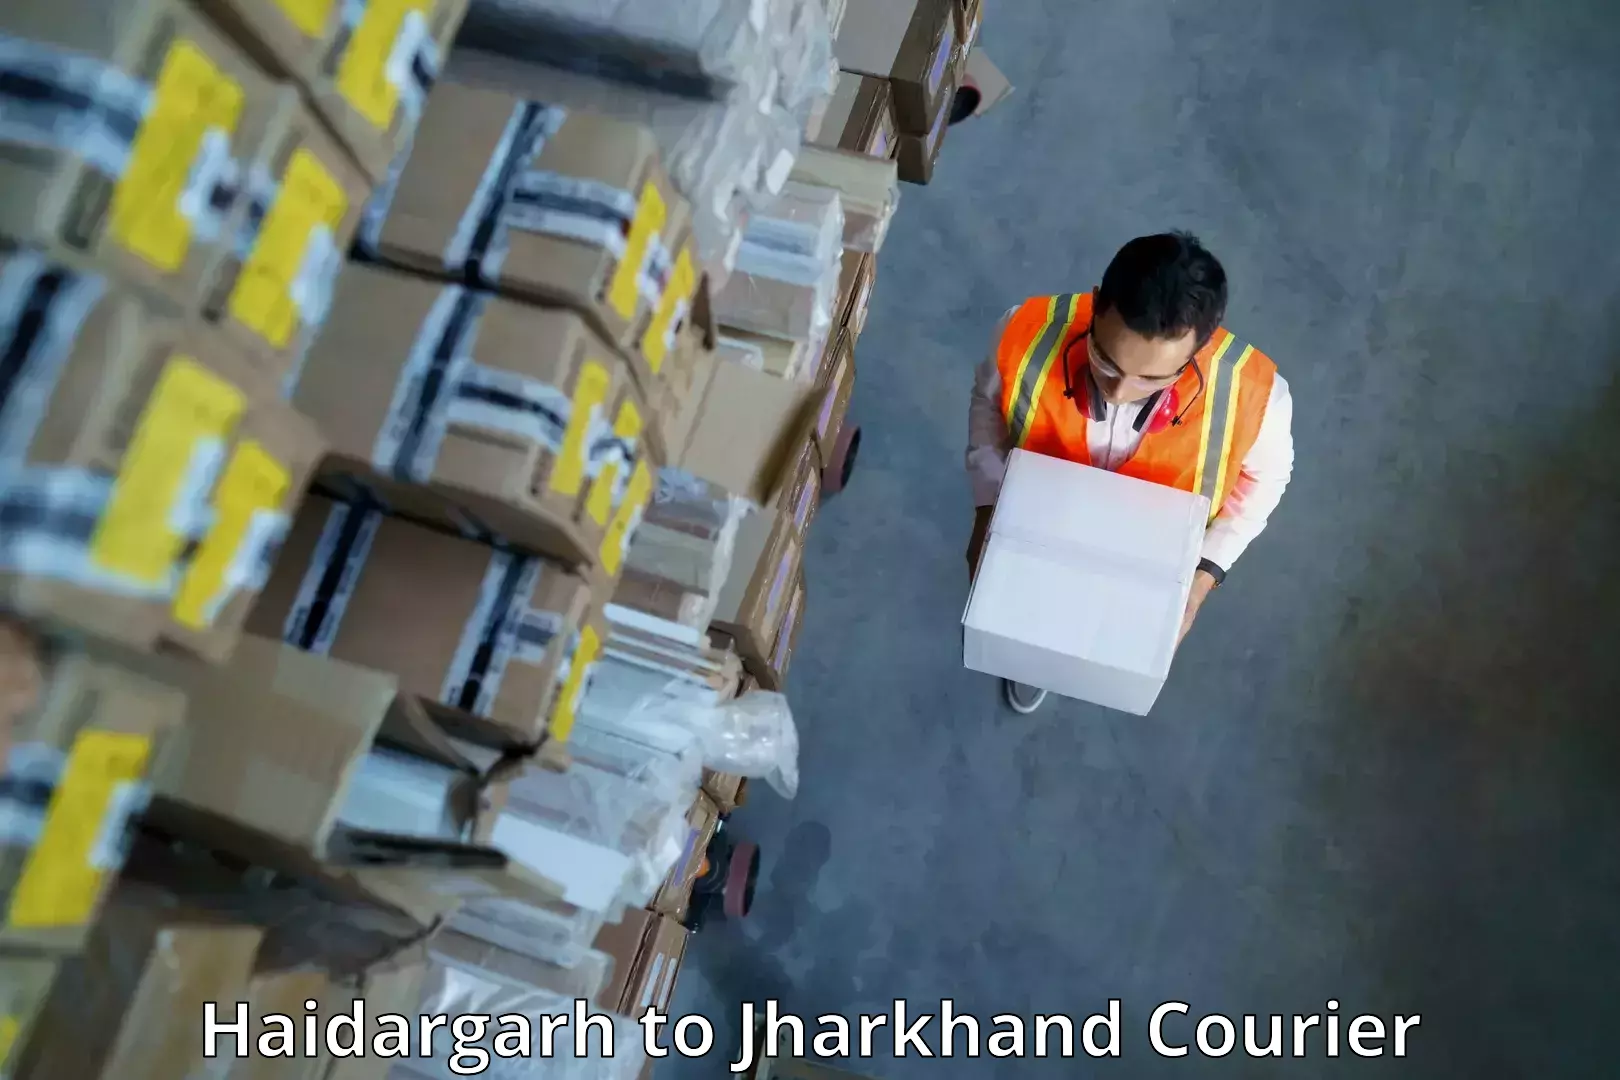 International parcel service Haidargarh to Jamshedpur